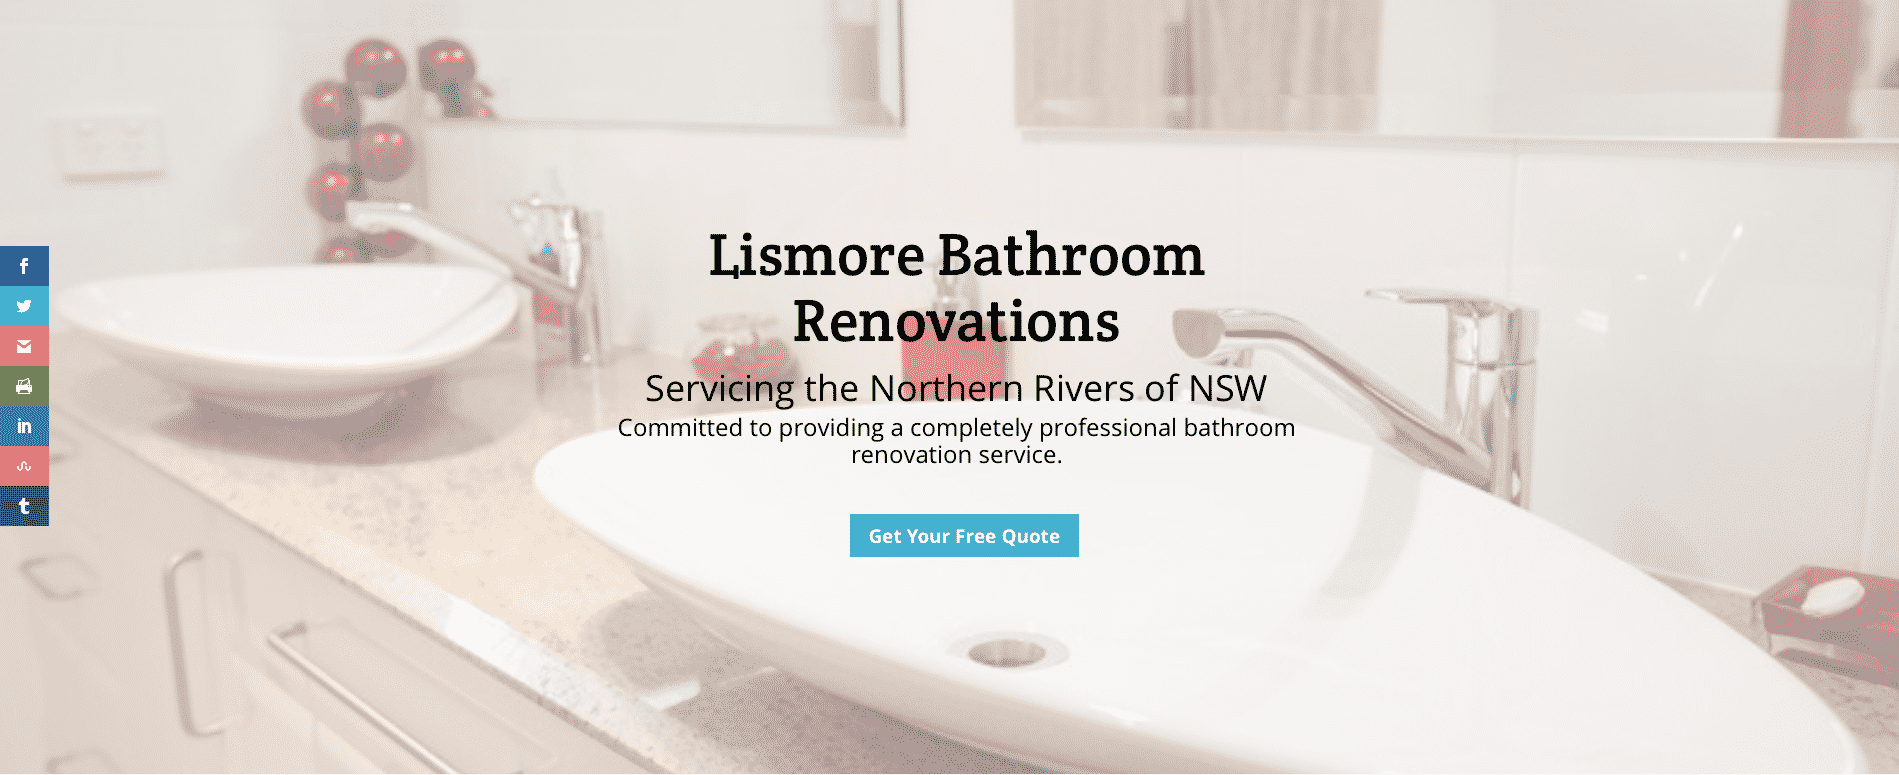 Lismore Bathroom - Website